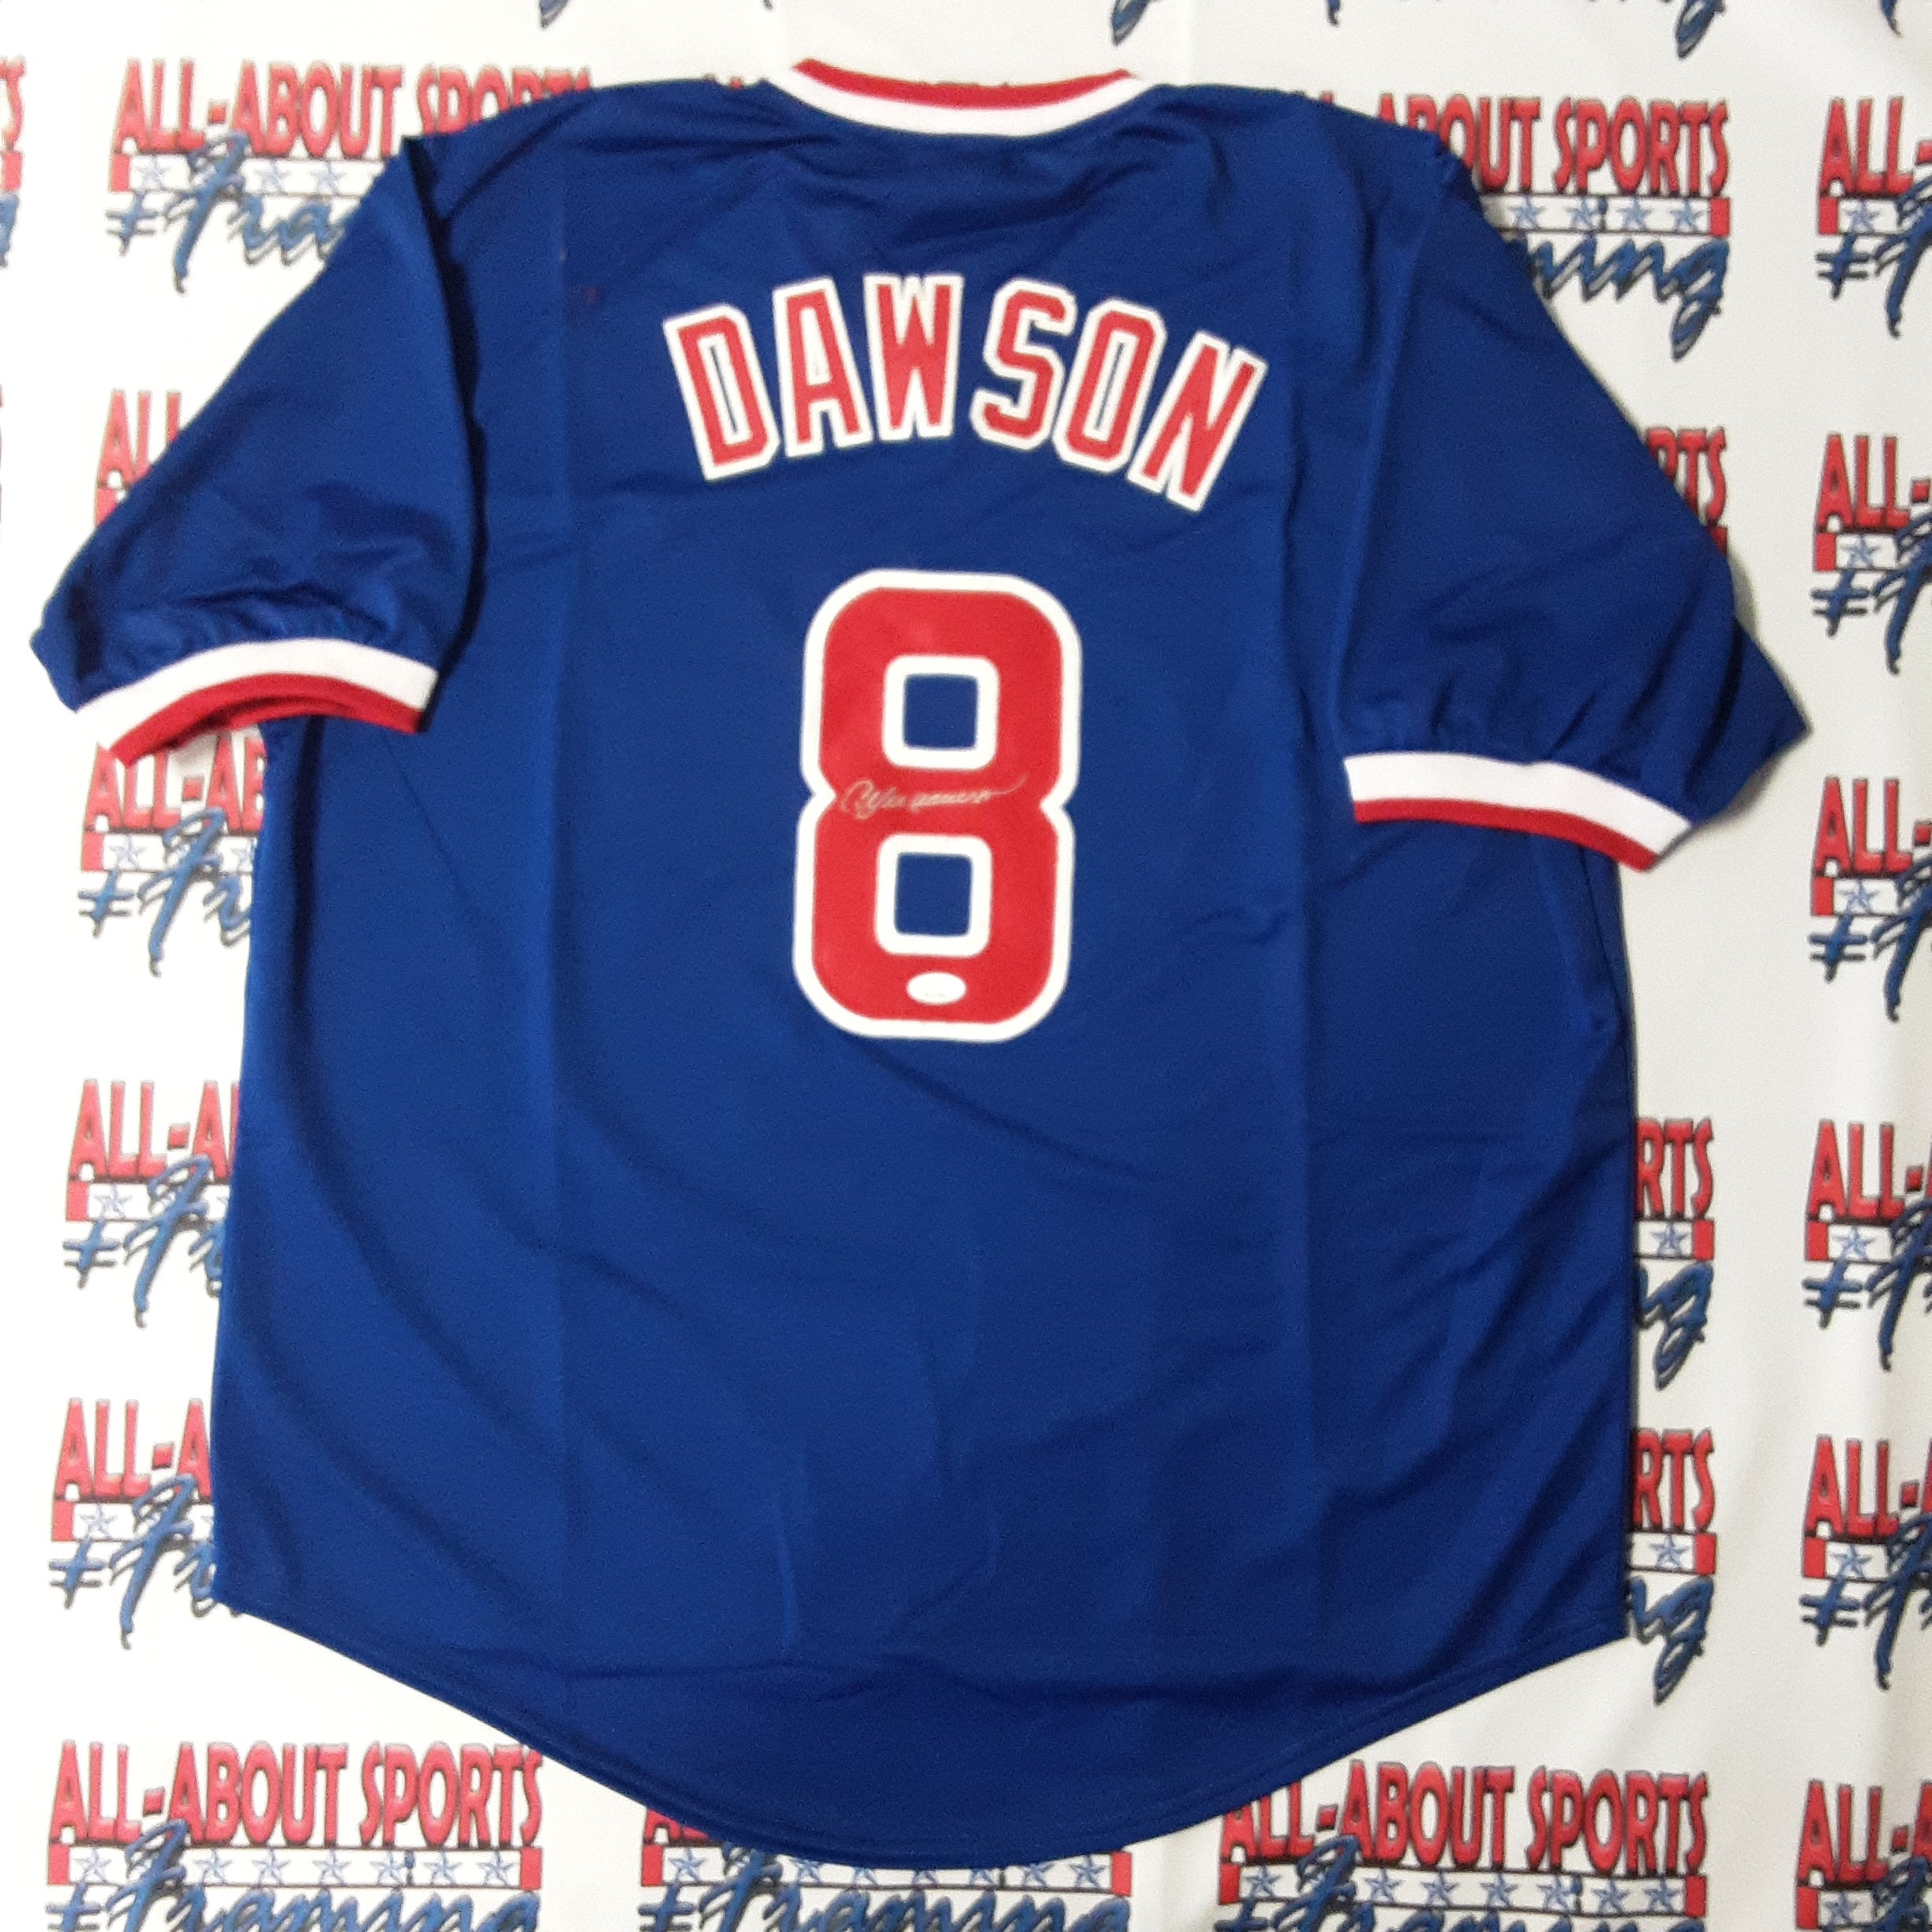 Andre Dawson (Cubs blue tower) Signed Autographed Framed Jersey JSA coa